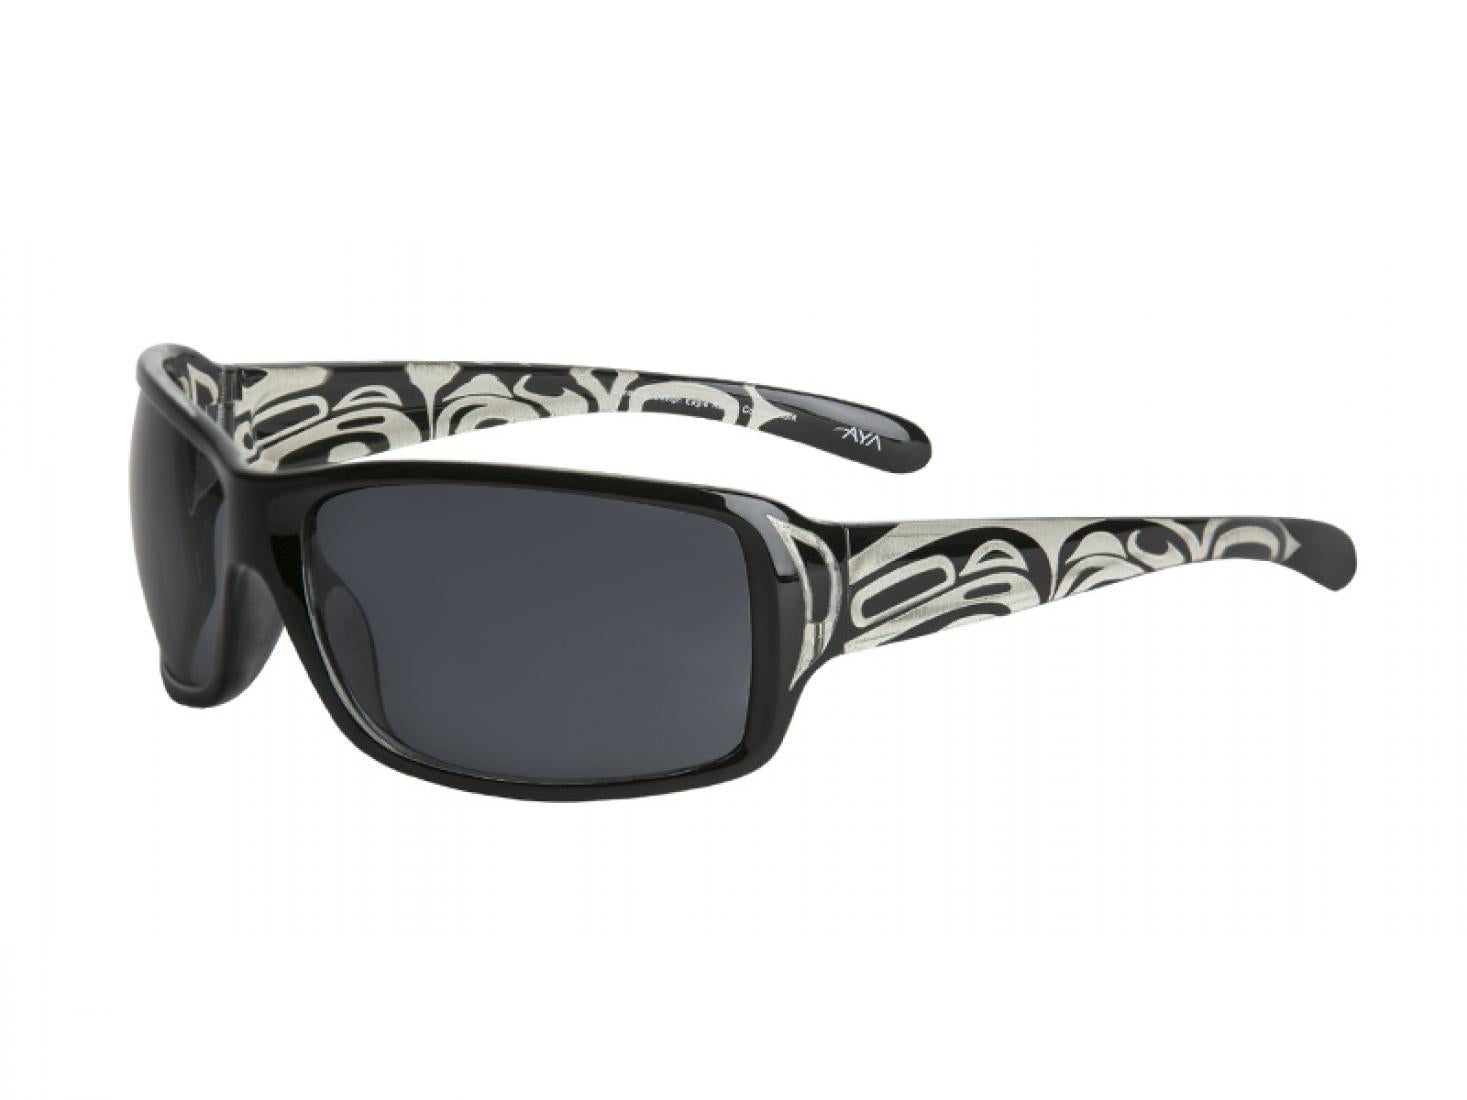 Wrap Style Sunglasses "Storm" with Eagle, Raven Design